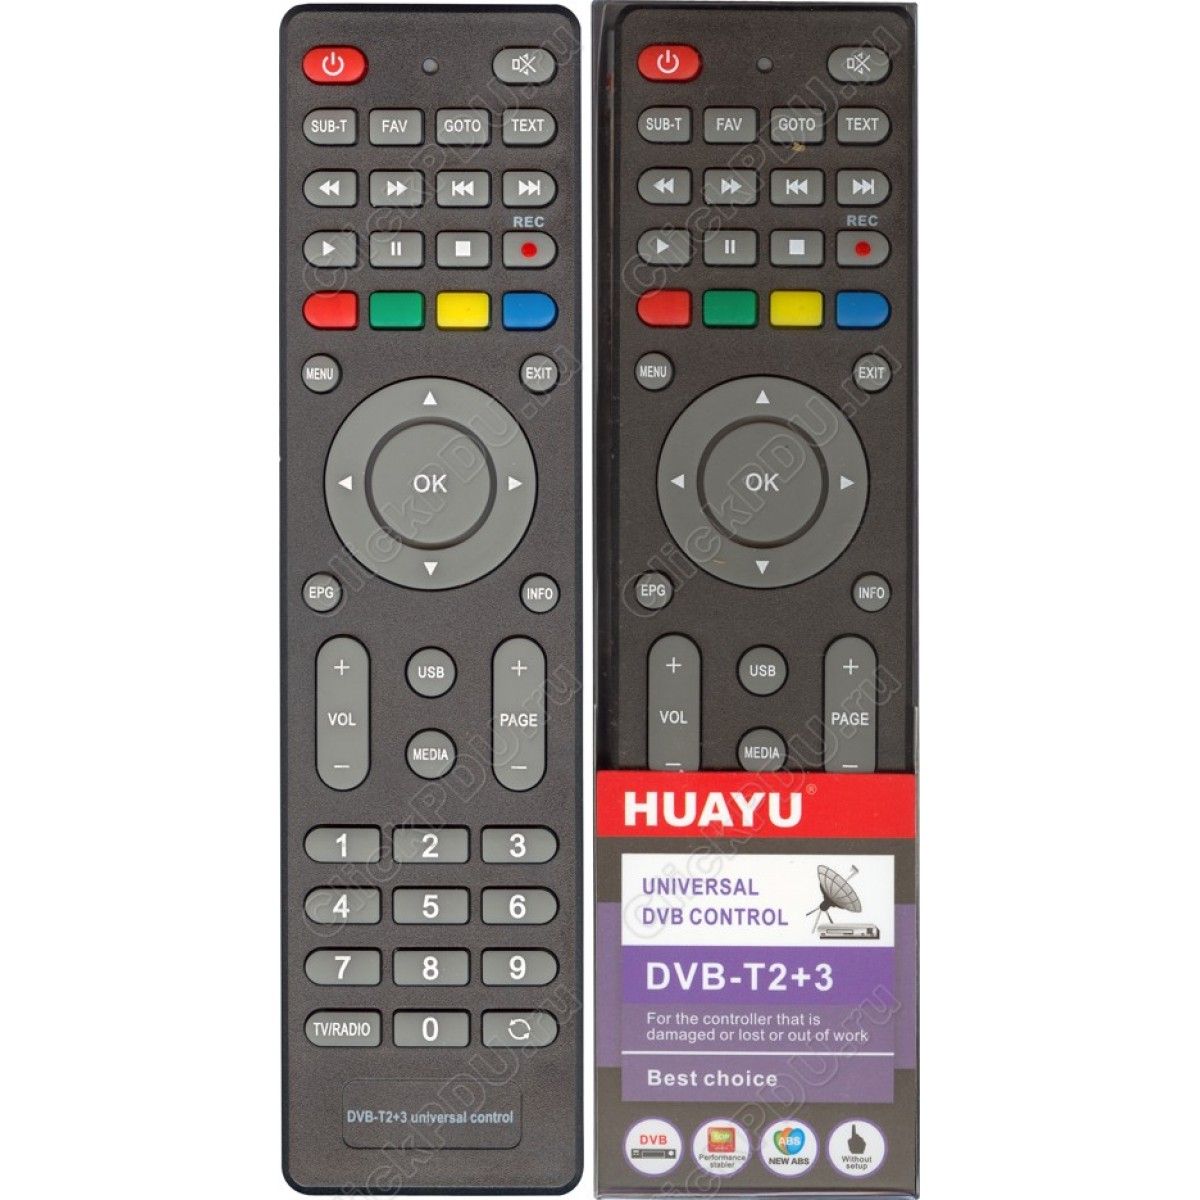 Huayu пульт dvb tv. Универсальный пульт Huayu DVB-t2+3 корпус MTC dn300. Пульт Lumax b0302. Пульт универсальный Huayu для DVB-t2+3. Пульт Ду для МТС dn300, ds300a, dc300a.